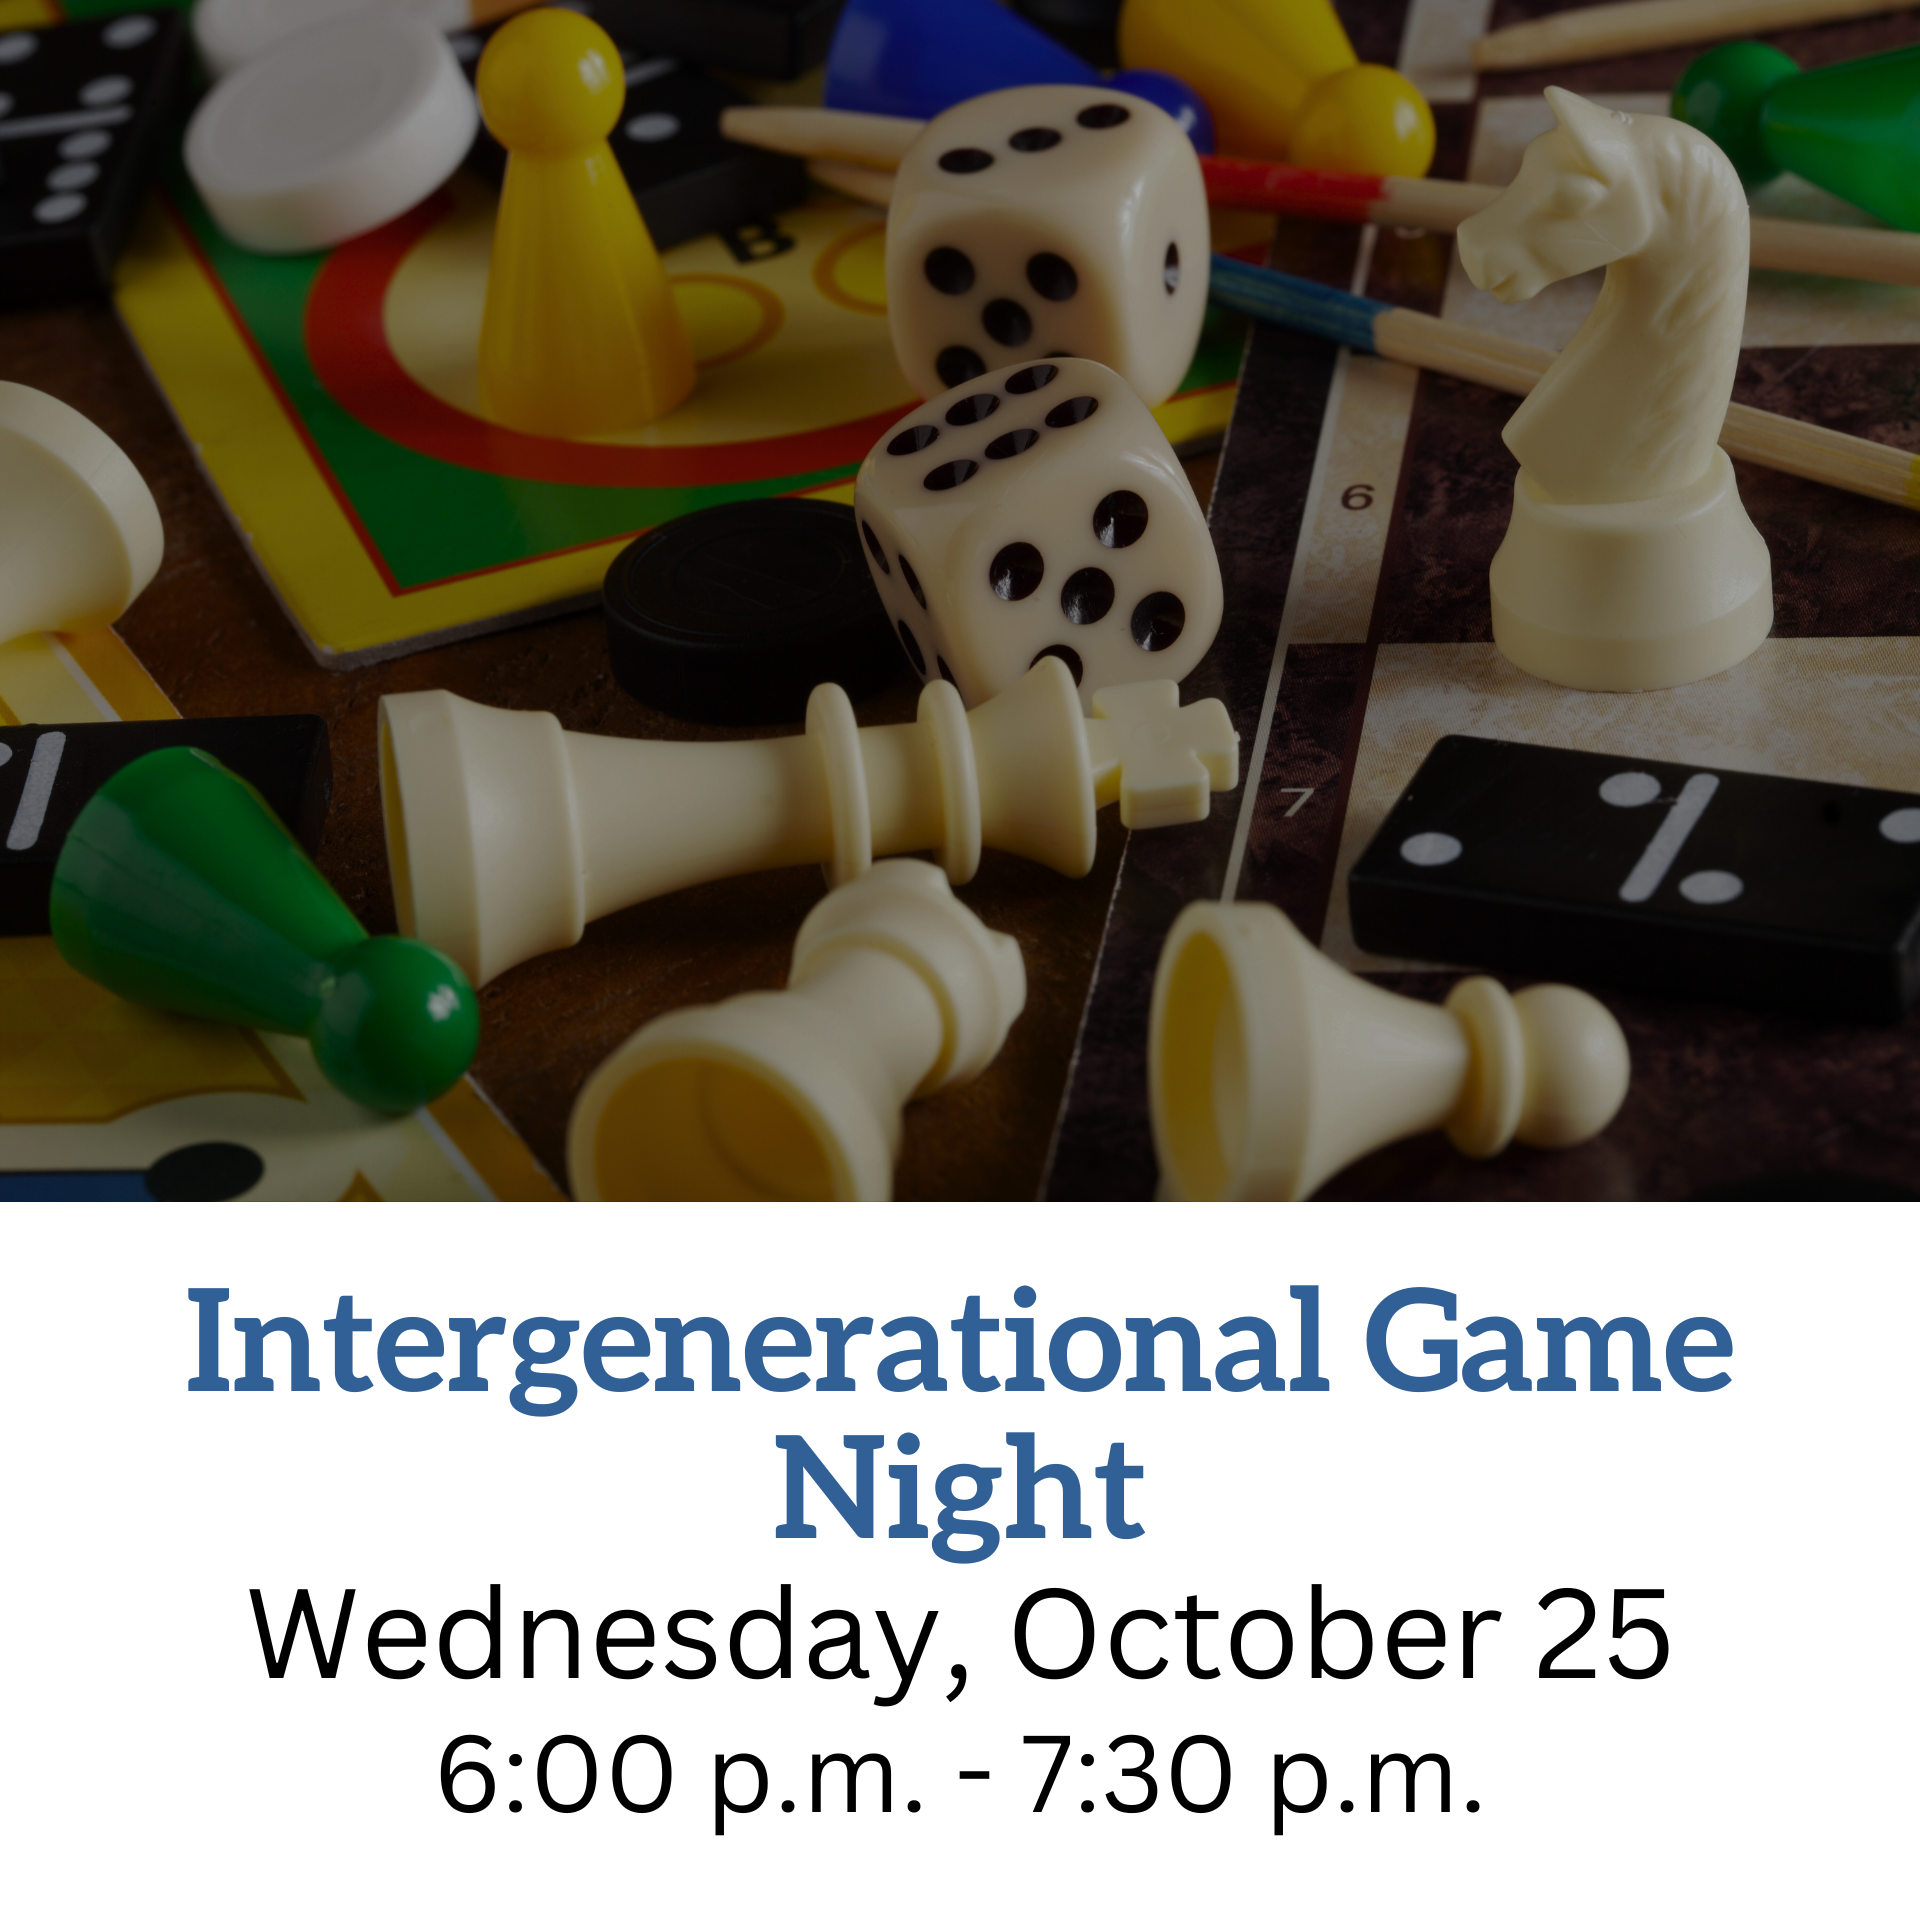 Intergenerational Game Night